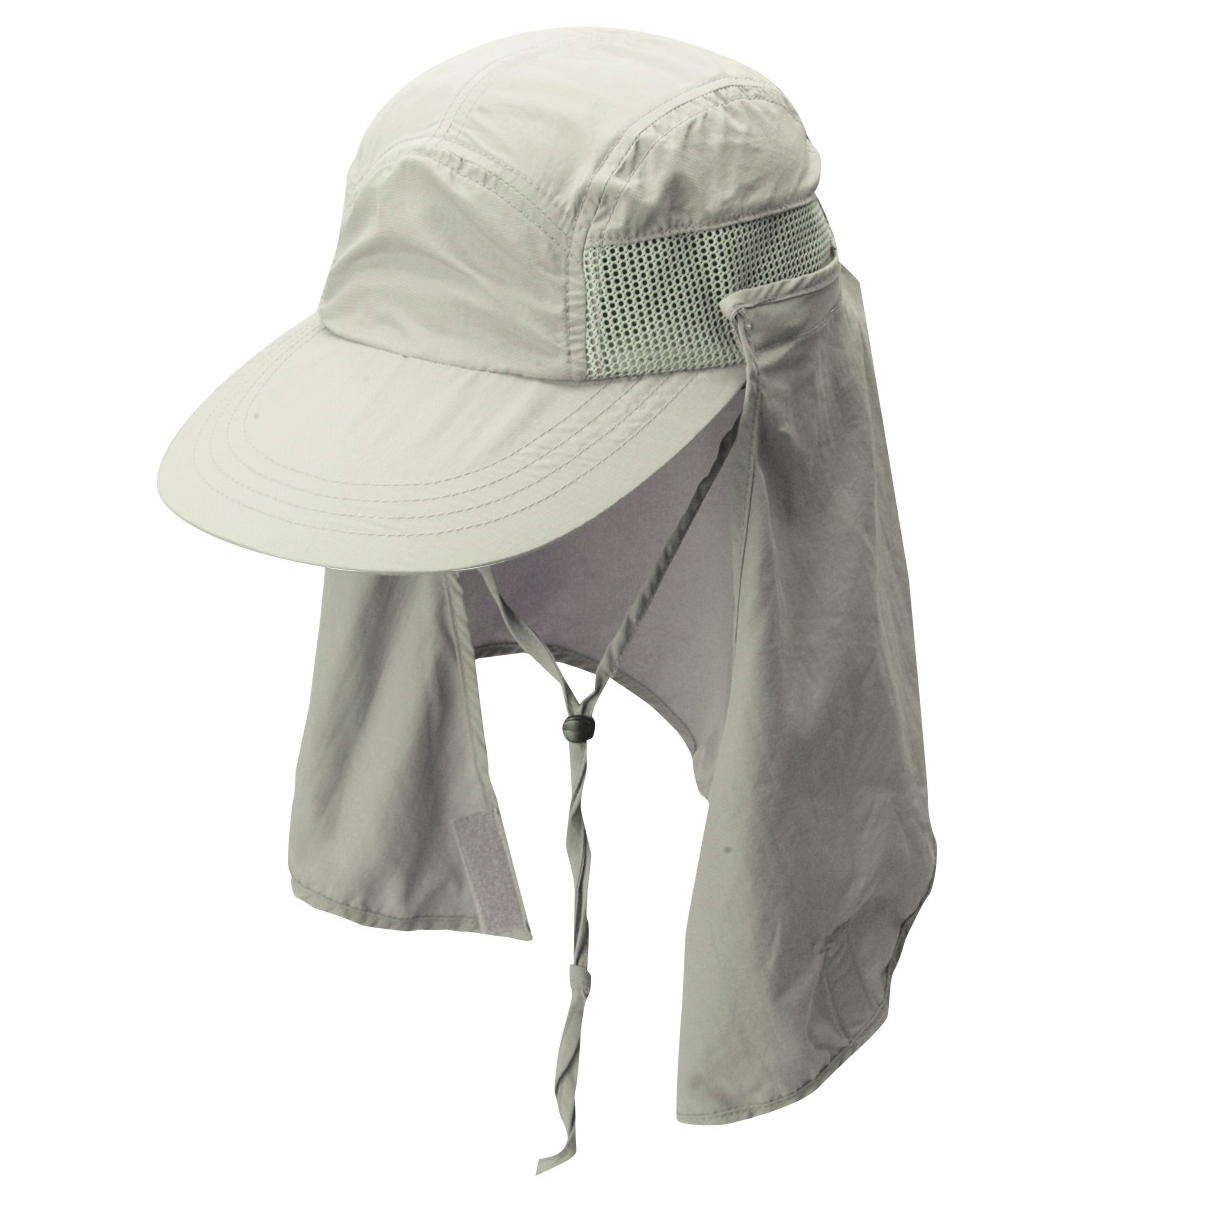 Supplex Nylon Fishing Cap with Removable Sunshield